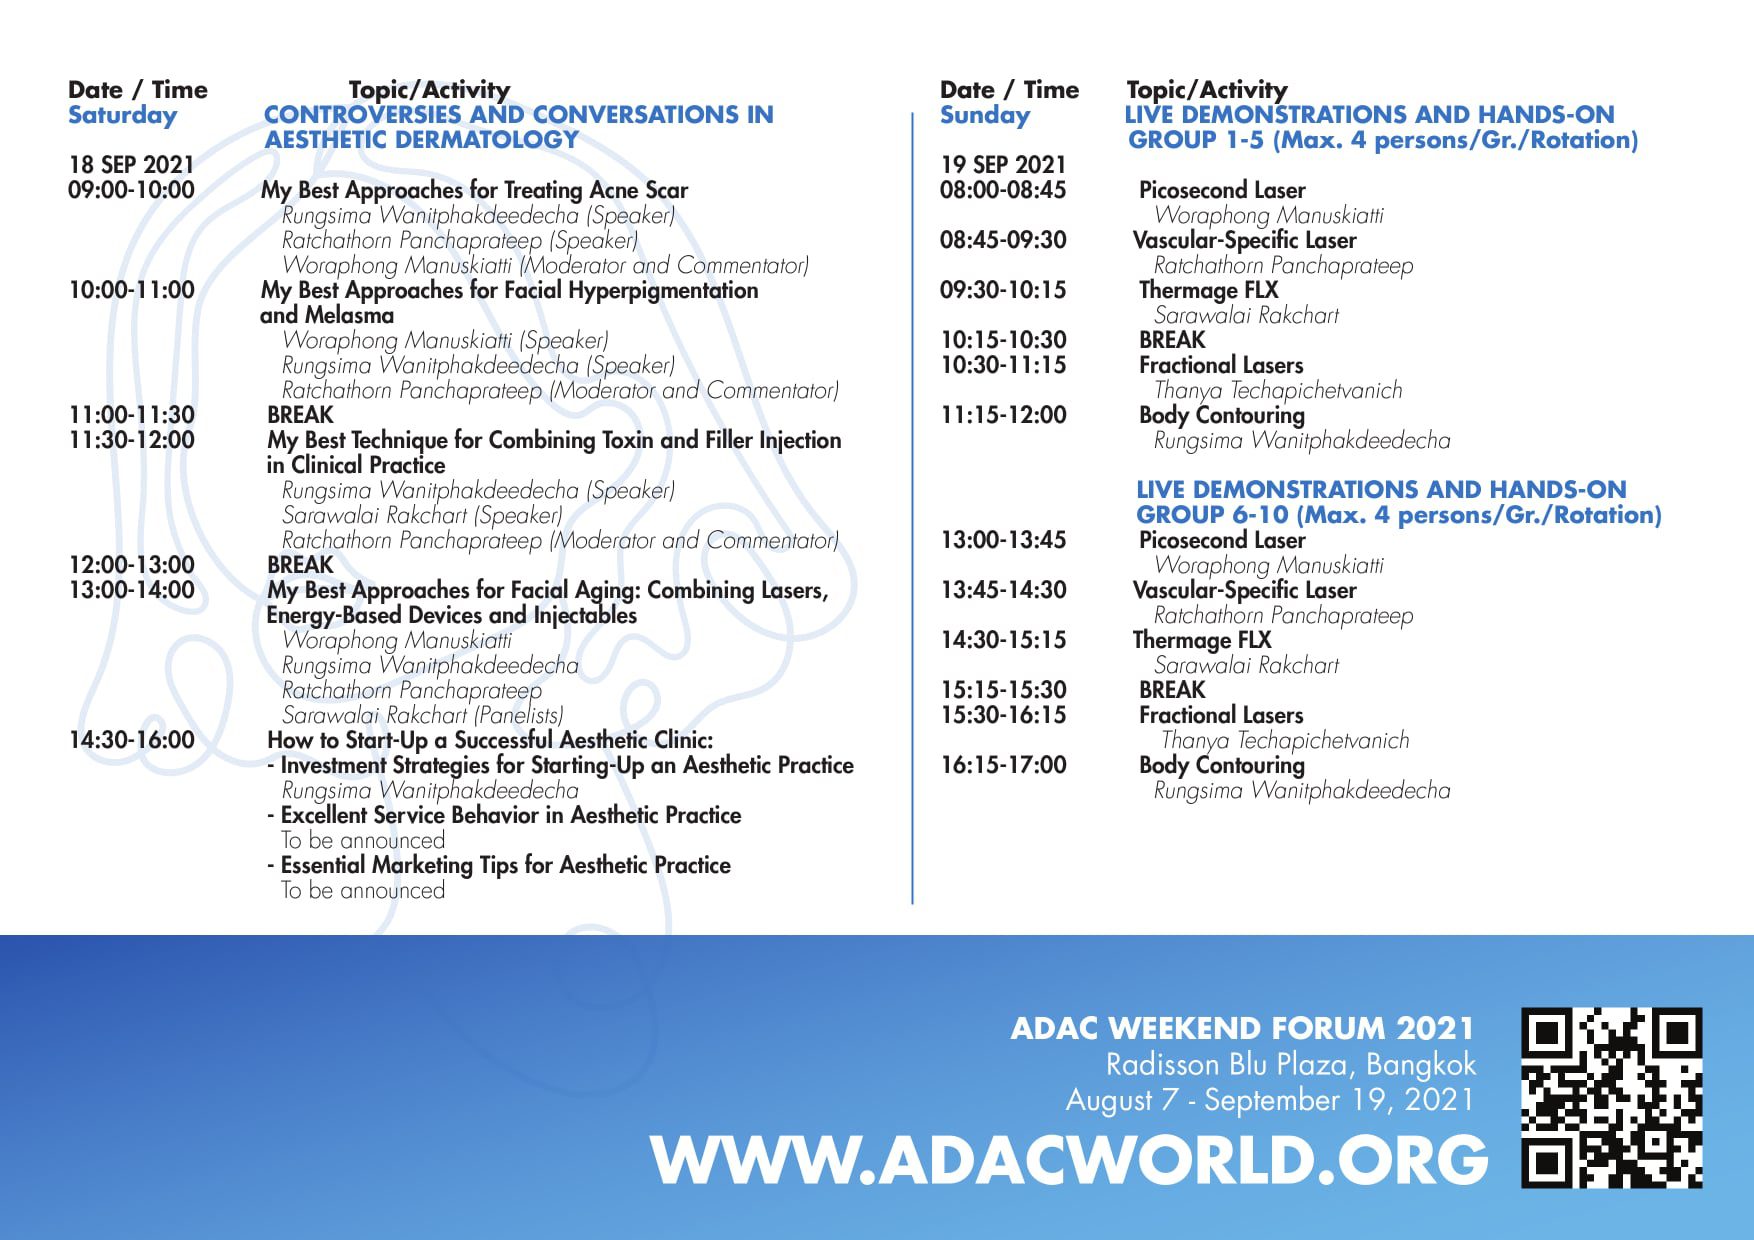 ADAC Weekend Forum 2021